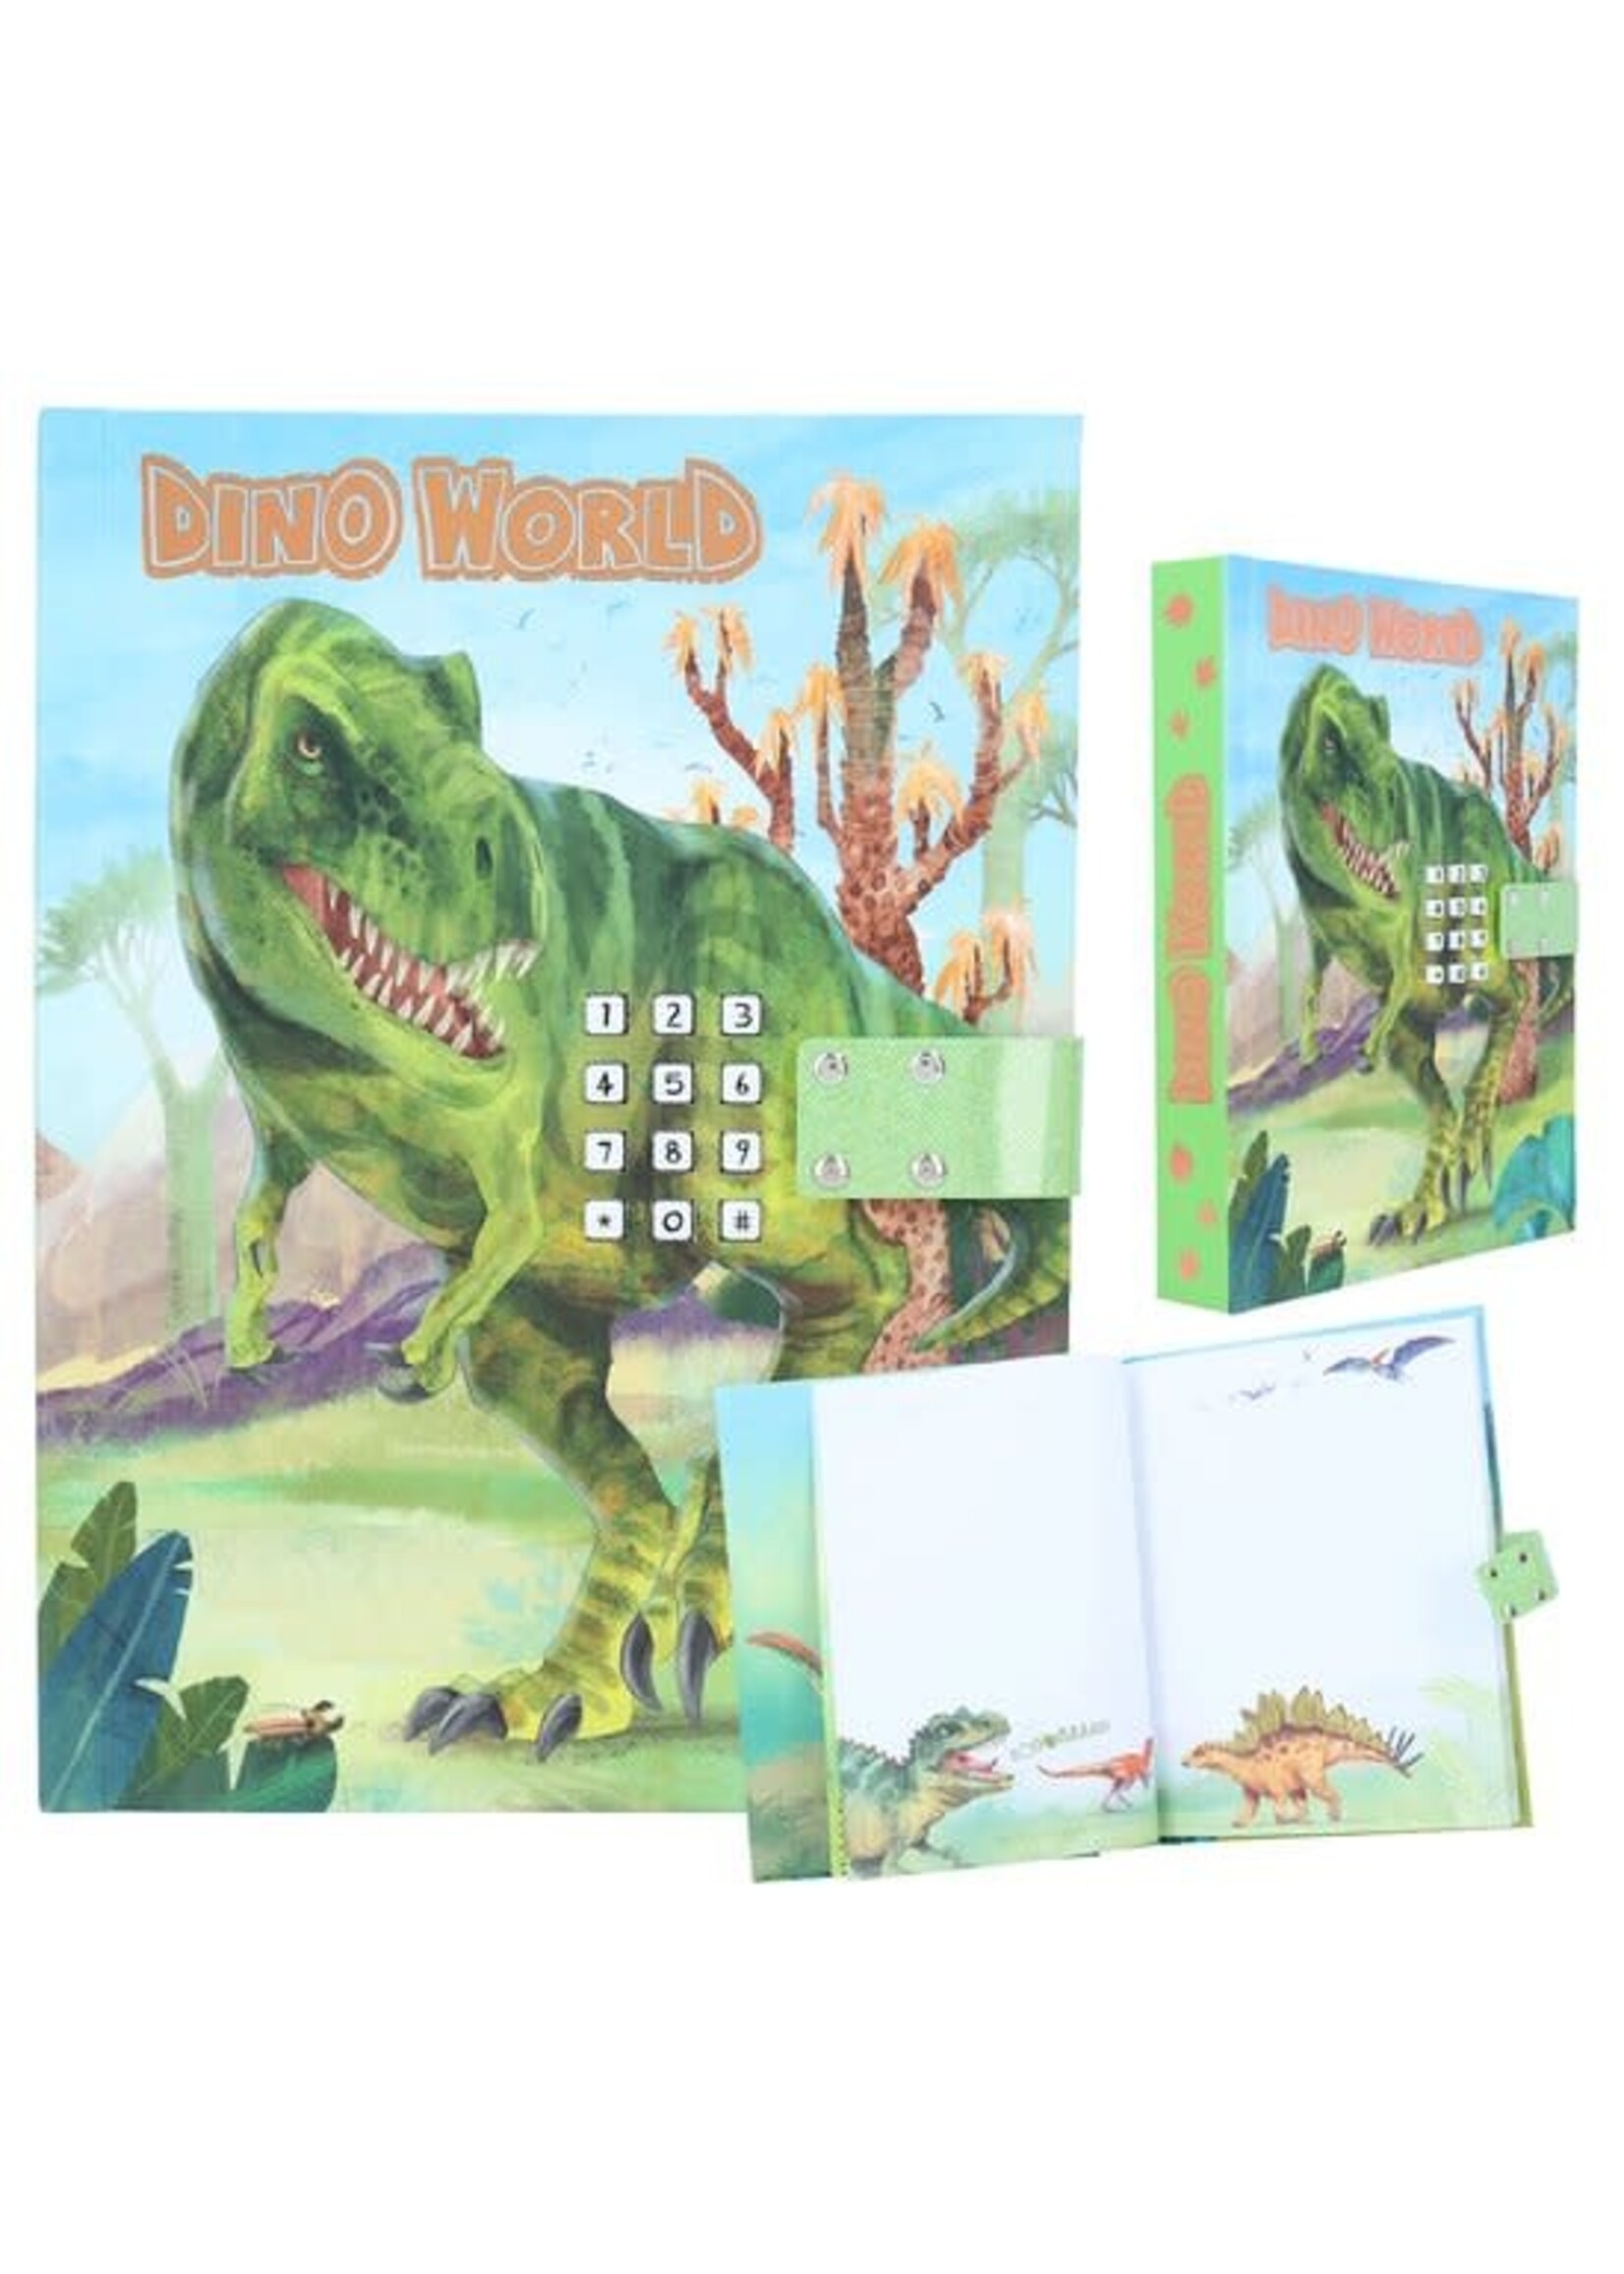 Dinoworld Dino World dagboek met geheime code